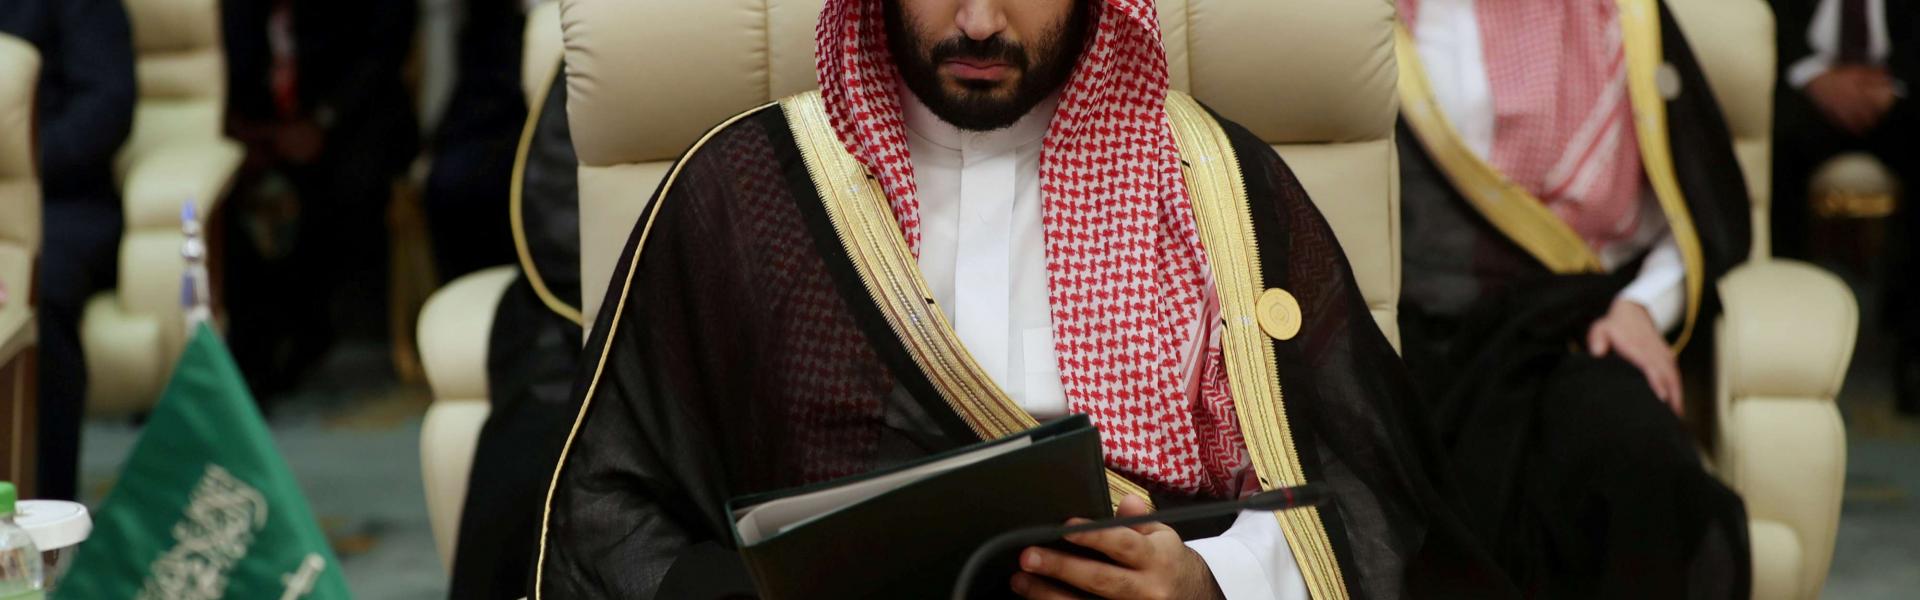 Credible evidence linking Saudi crown prince to Khashoggi murder - UN report